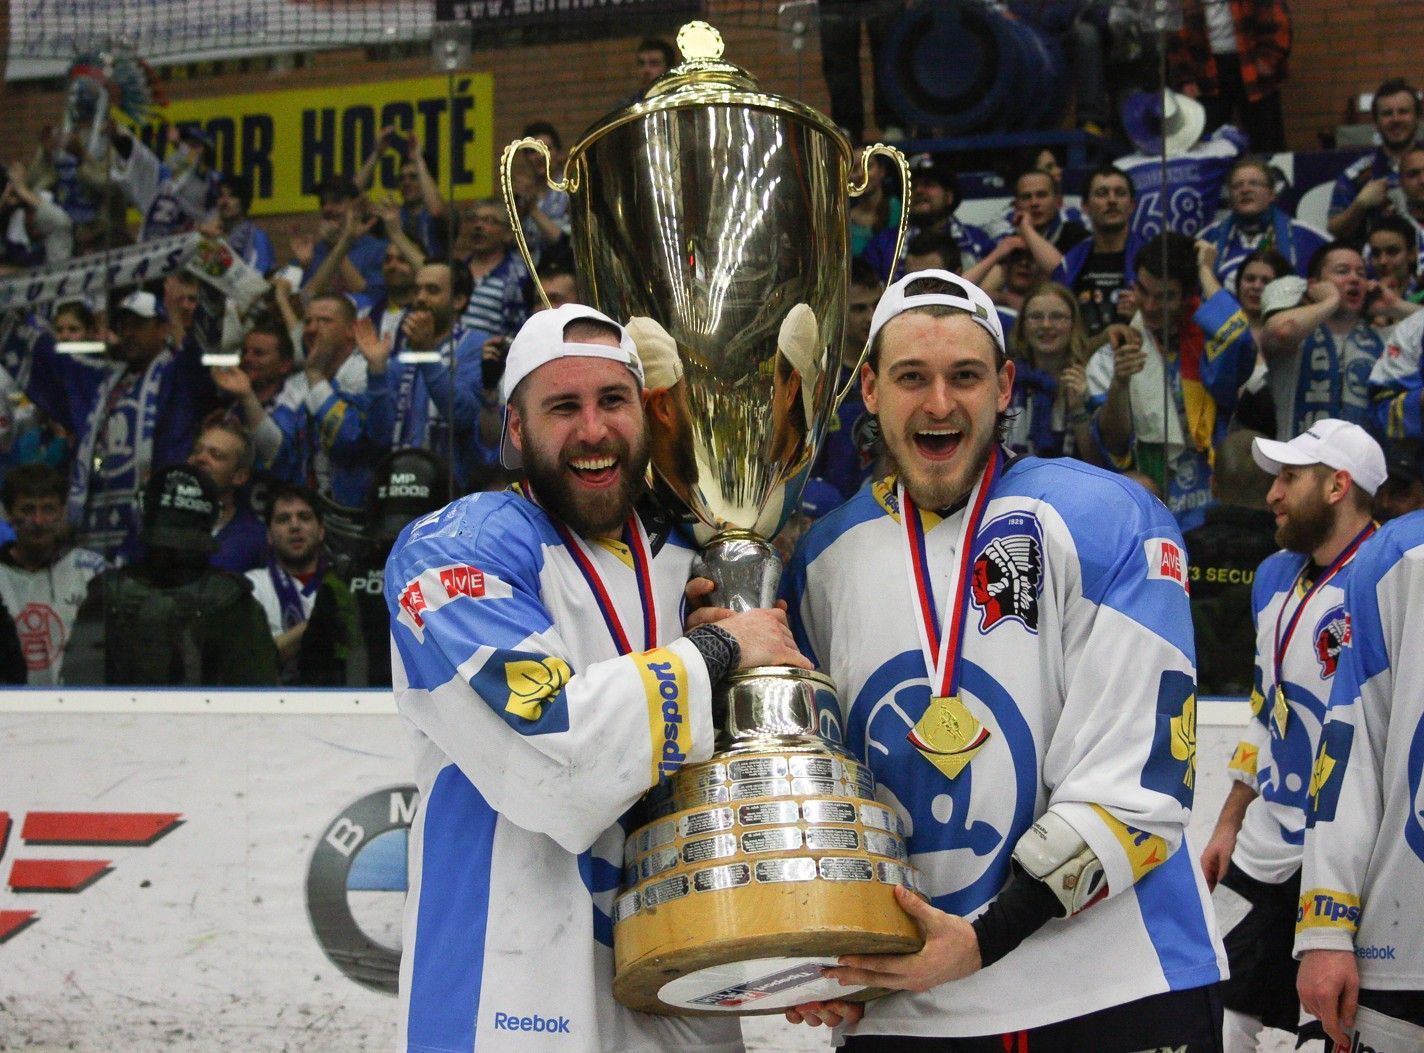 Hokej, Zlín - Plzeň: Nicholas Johnson a Nicolas St. Pierre